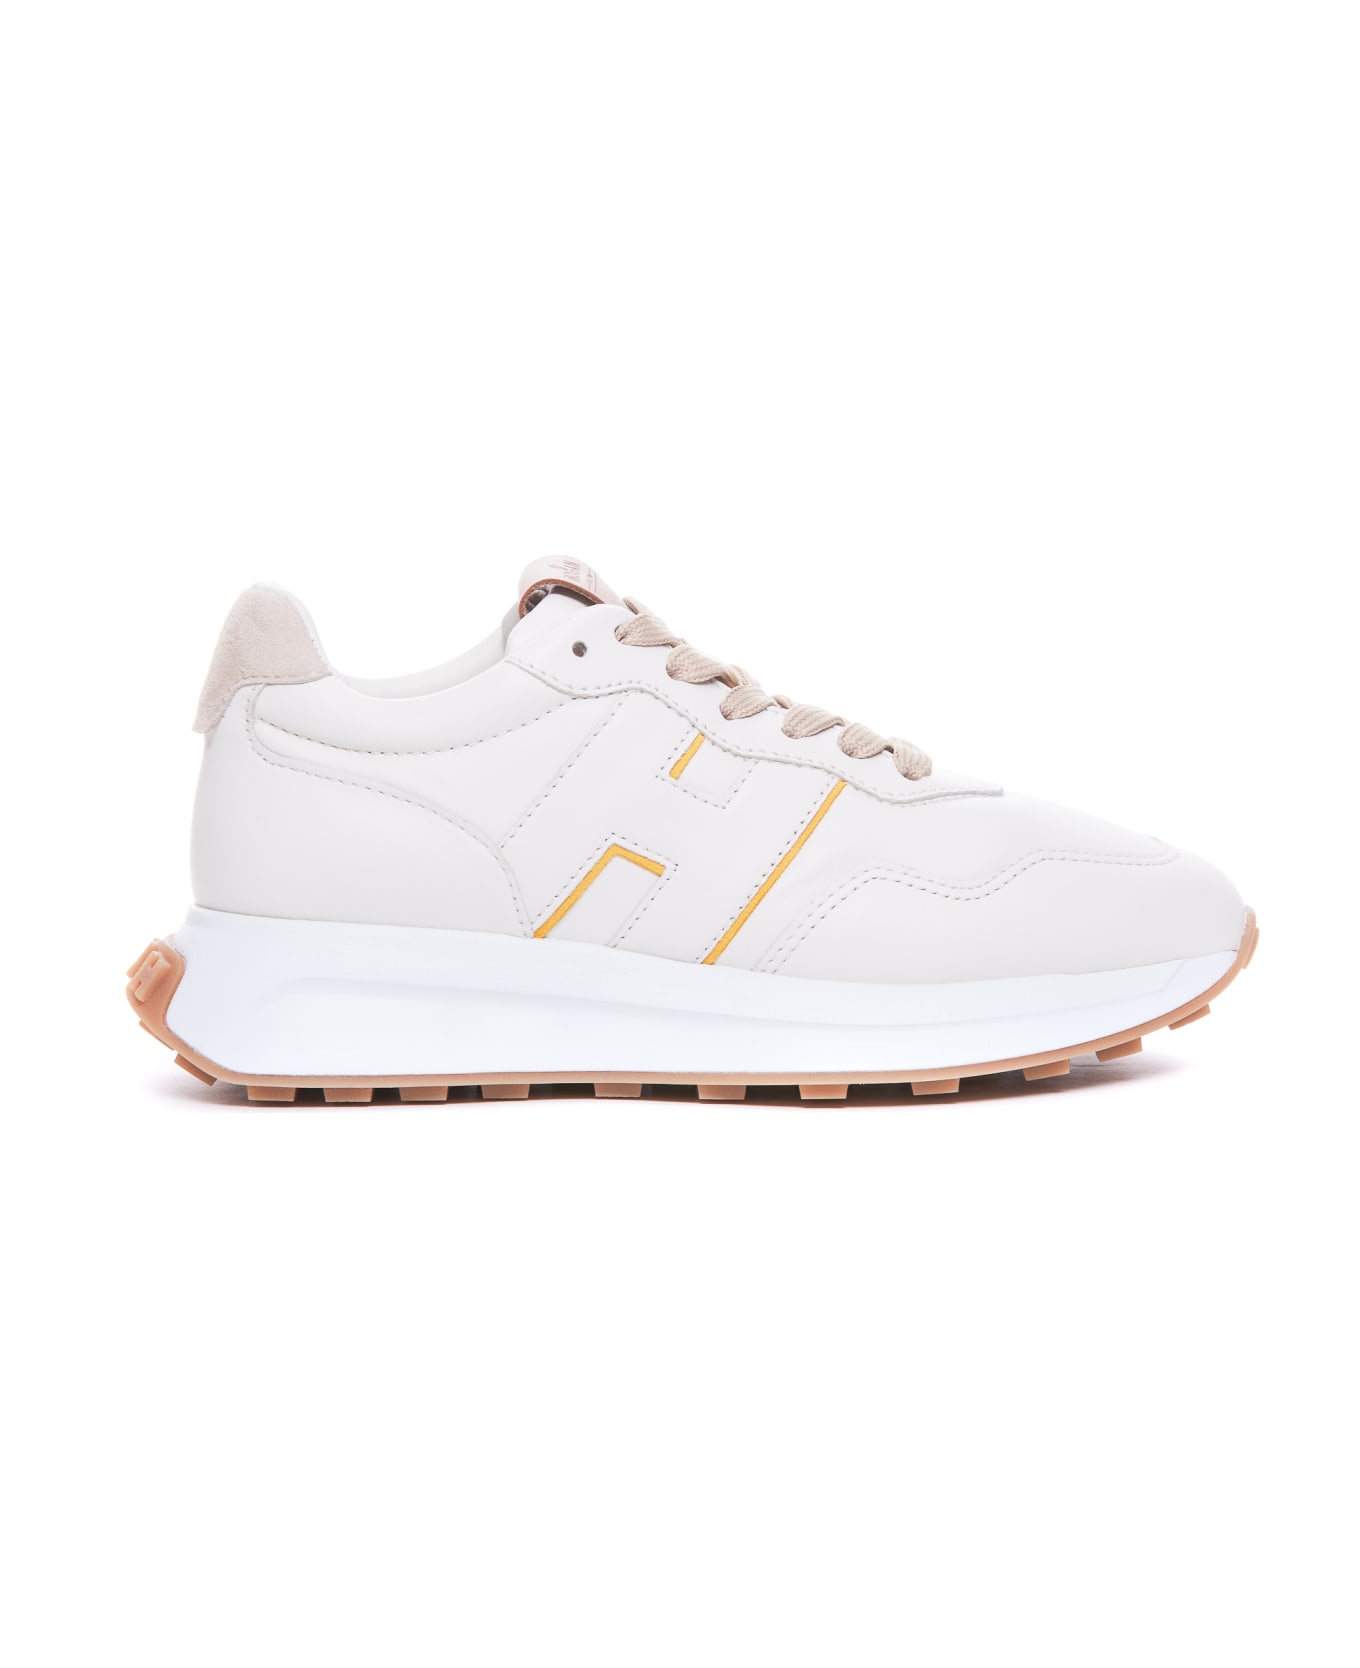 Hogan H641 Sneaker - Beige